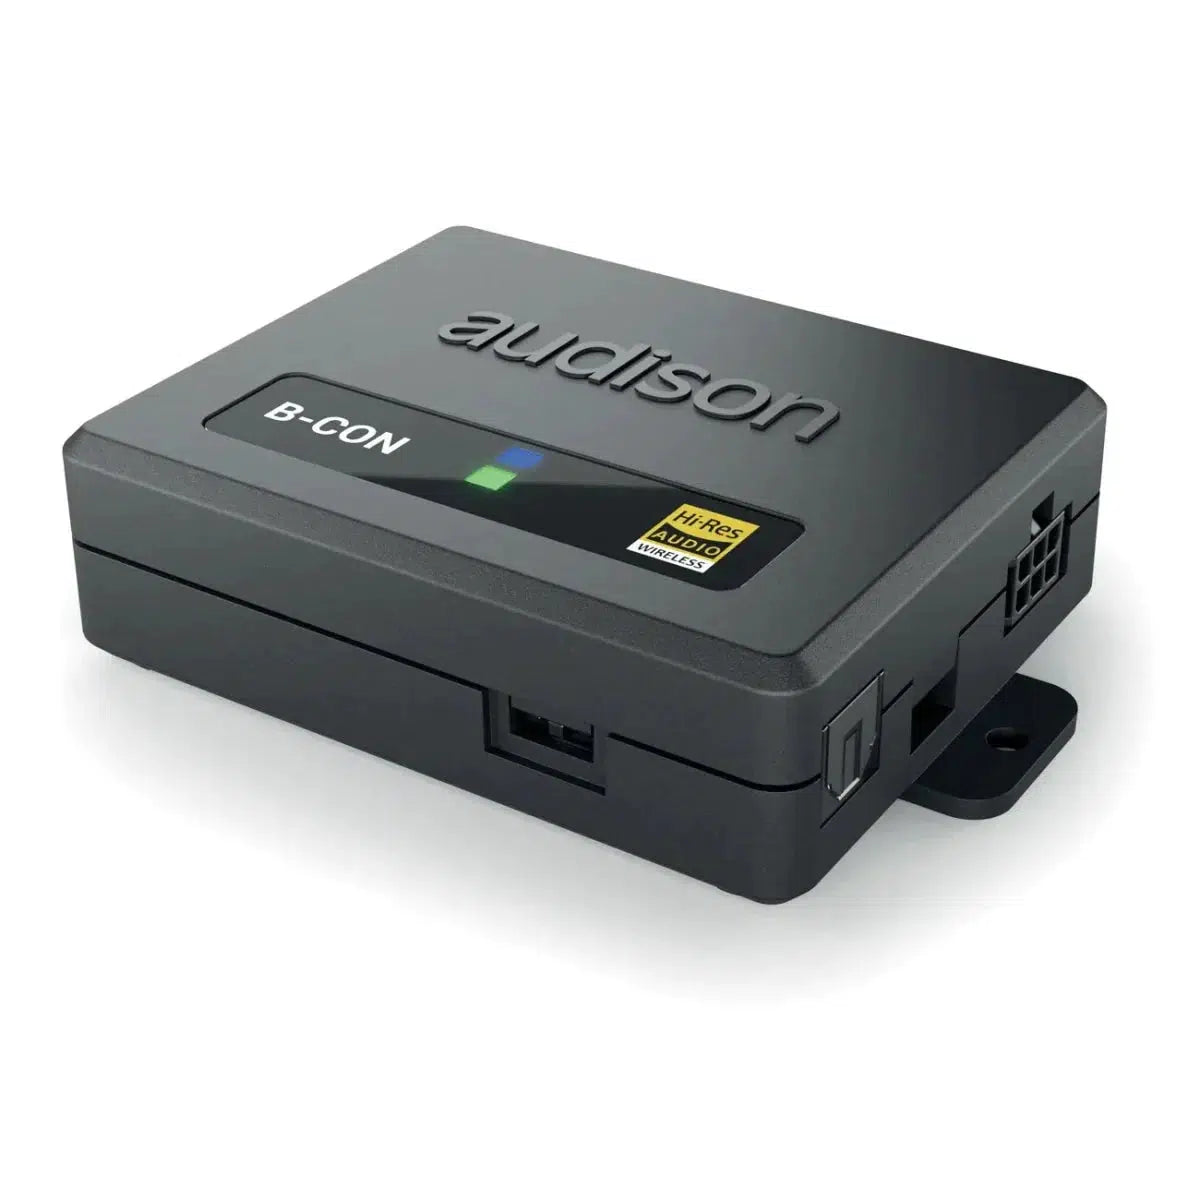 Audison-bit B-CON-Amplificador-Accesorios-Masori.de